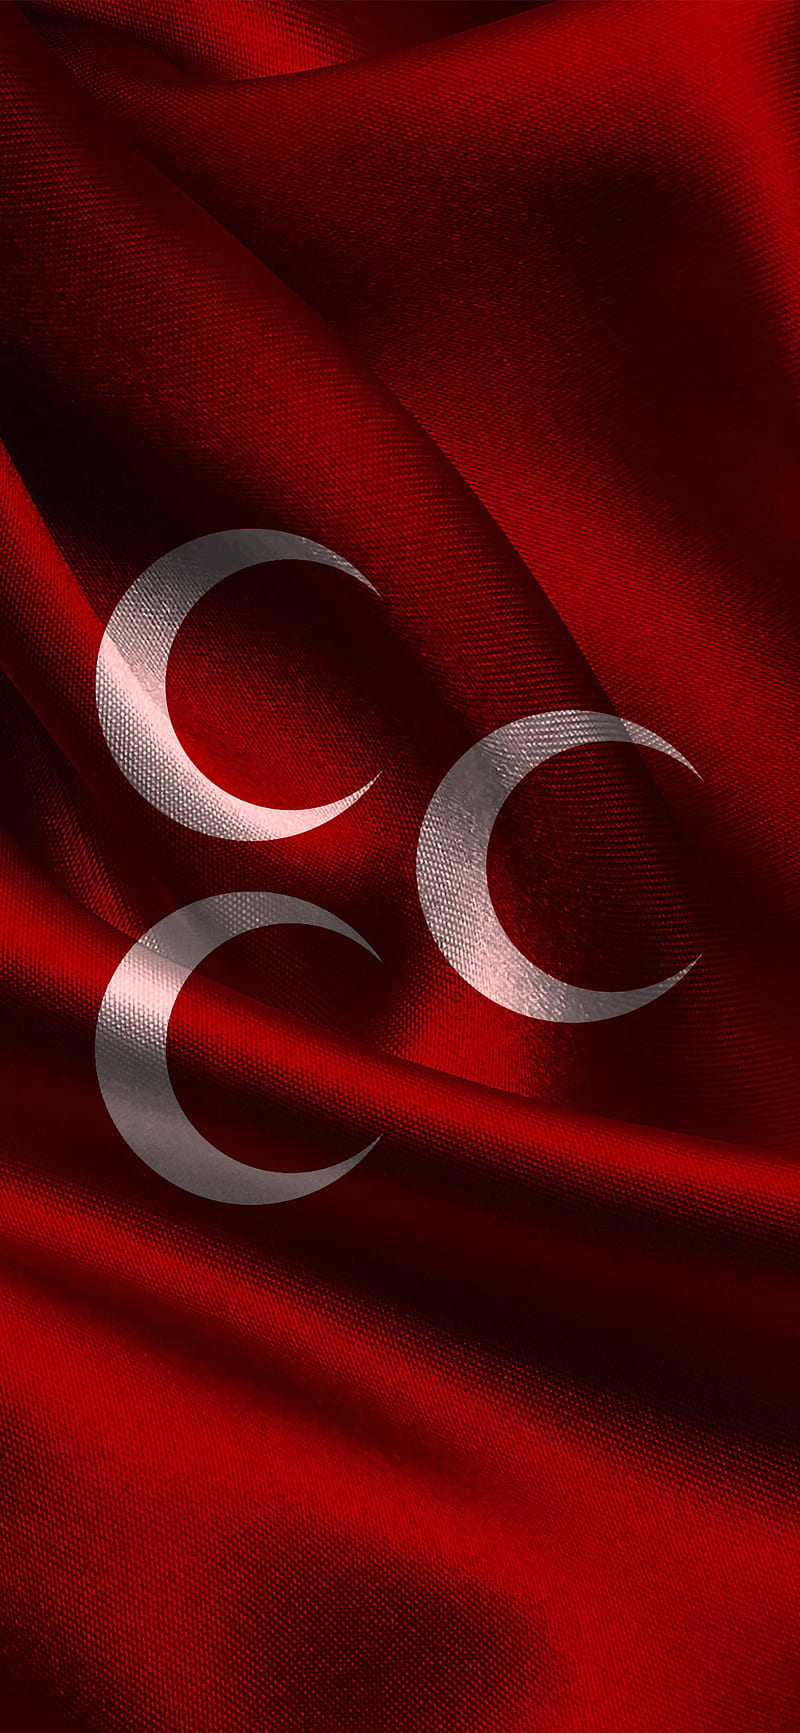 UC HILAL MHP, 3 hilal, hcdnmez design, milliyetci hareket, osmanli, turan, turk, turk bayragi, uc hilal, ulkucu, HD phone wallpaper